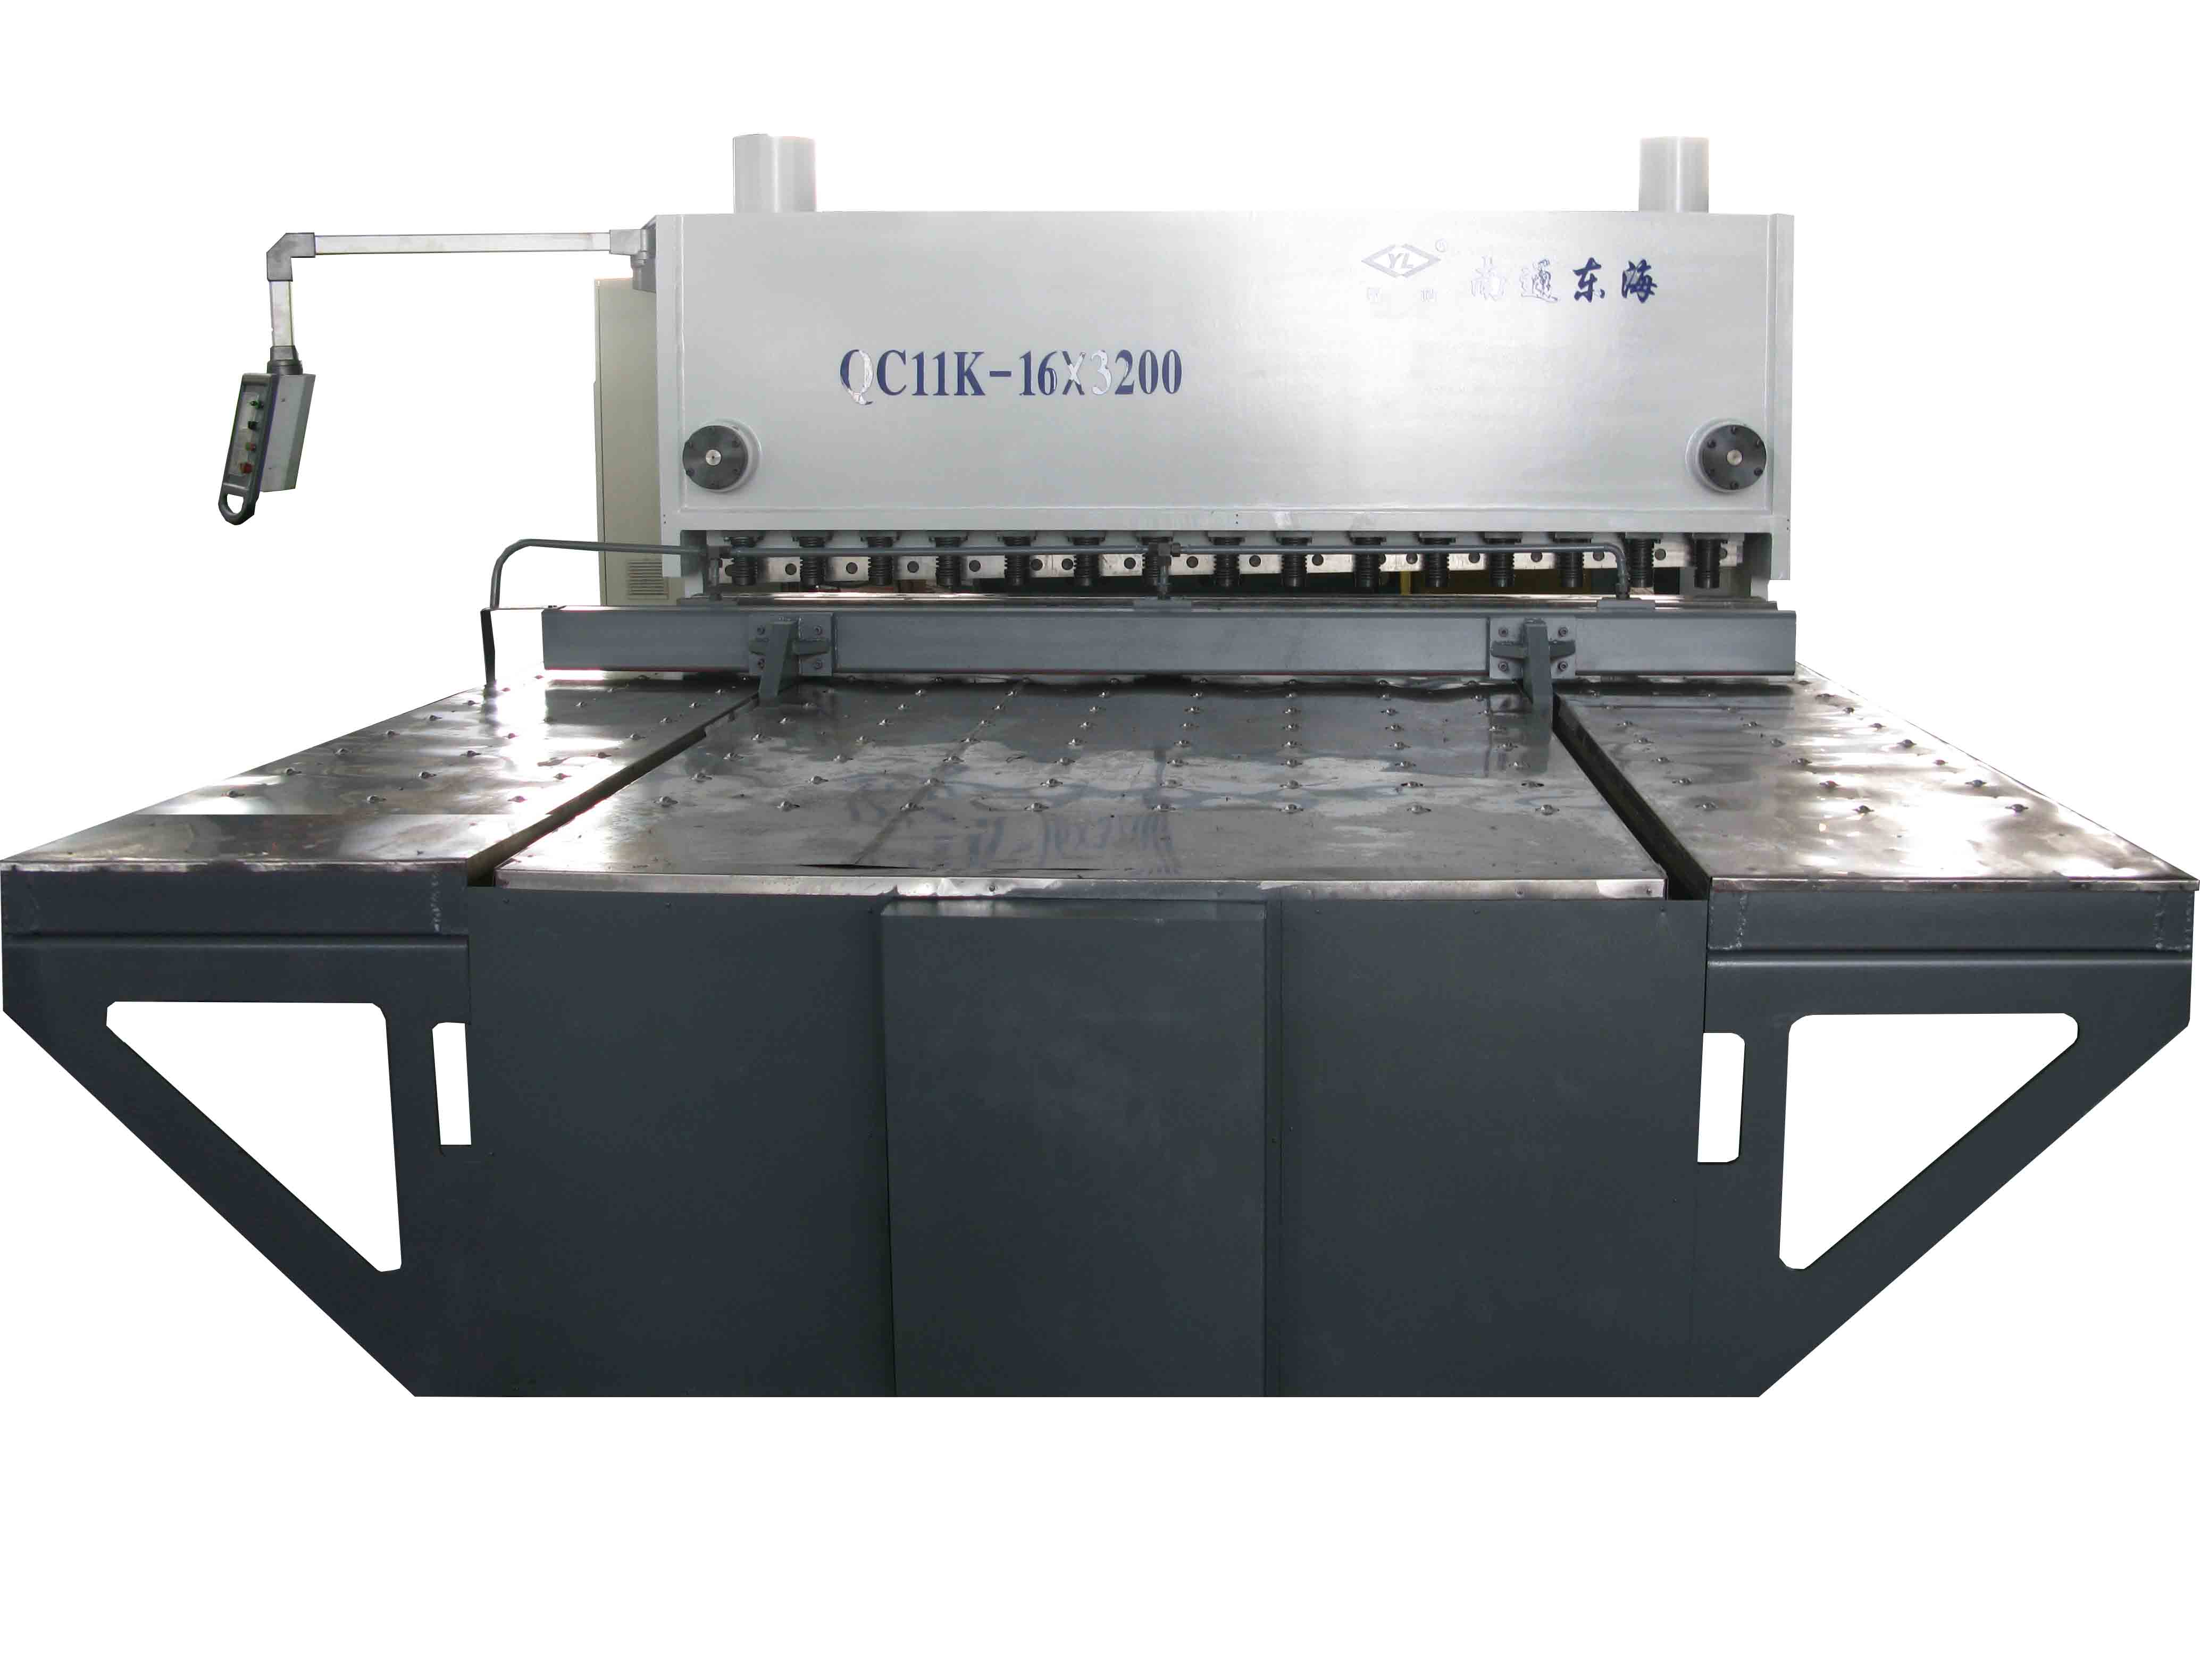 CNC guillotine shearing machine